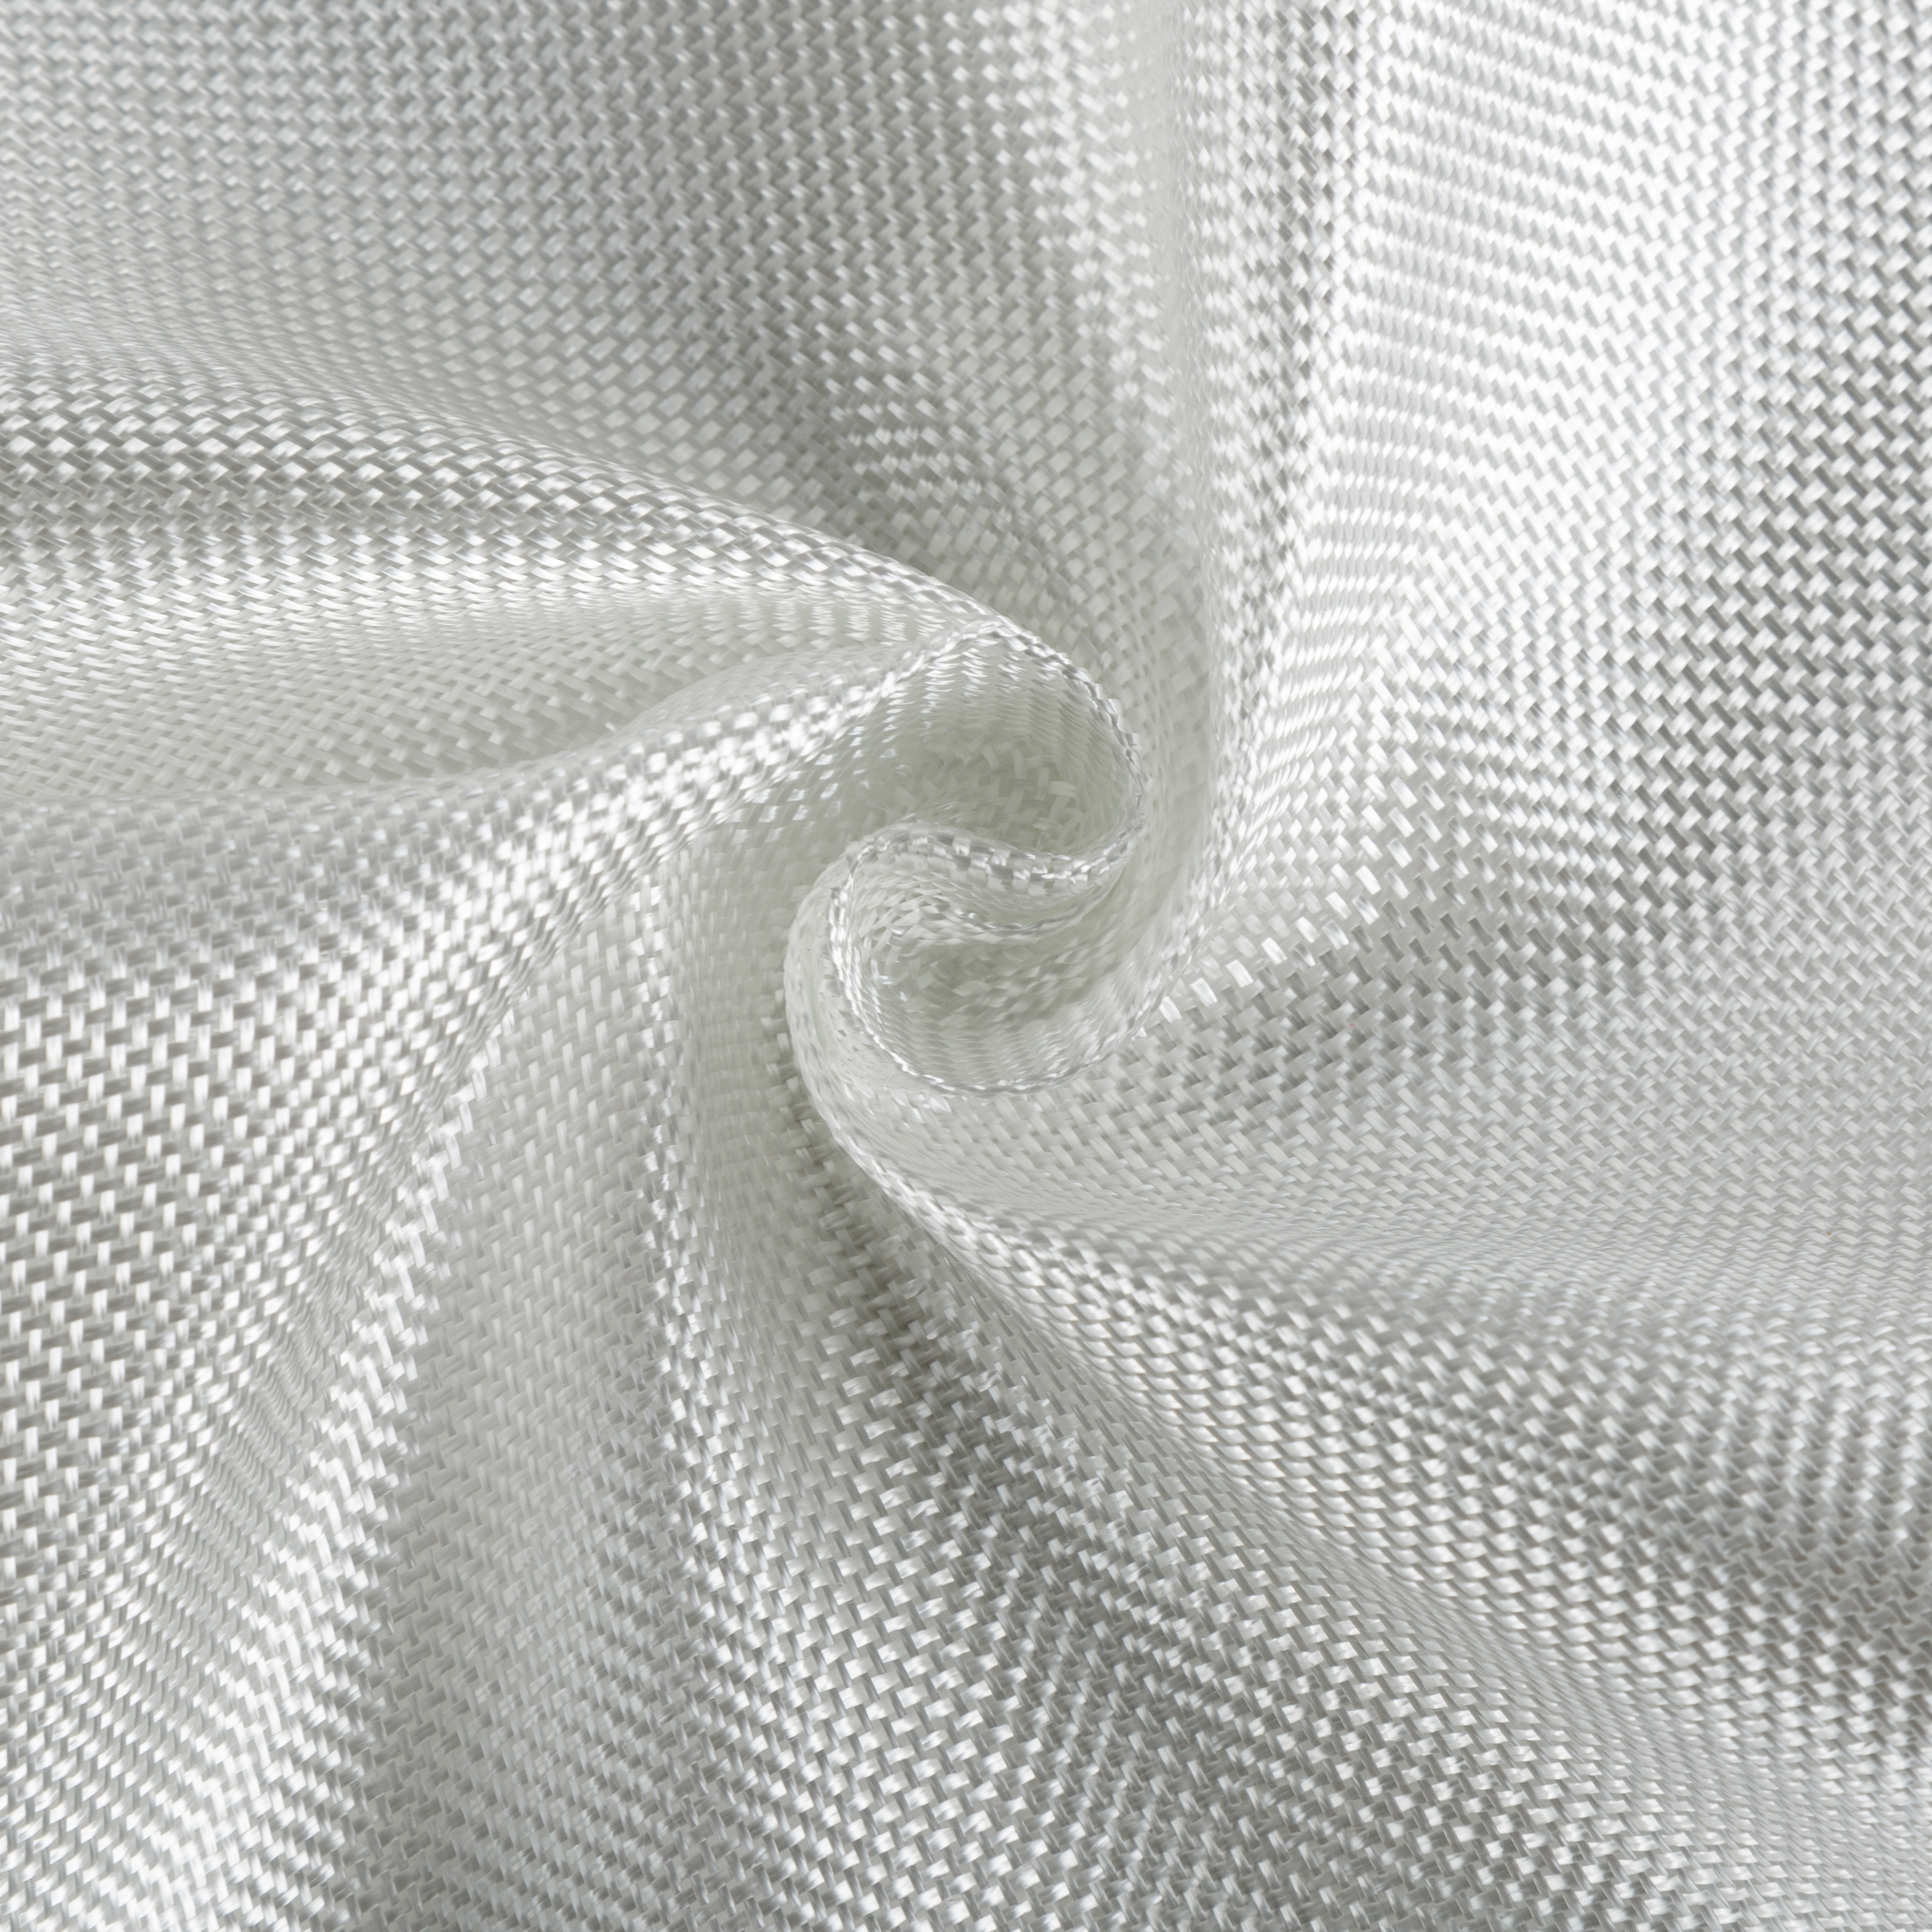 E-class 135gsm Glass fiber Tear Resistant Woven Fiberglass Fabric Cut-resistant Reinforce Cloth 1m*1m